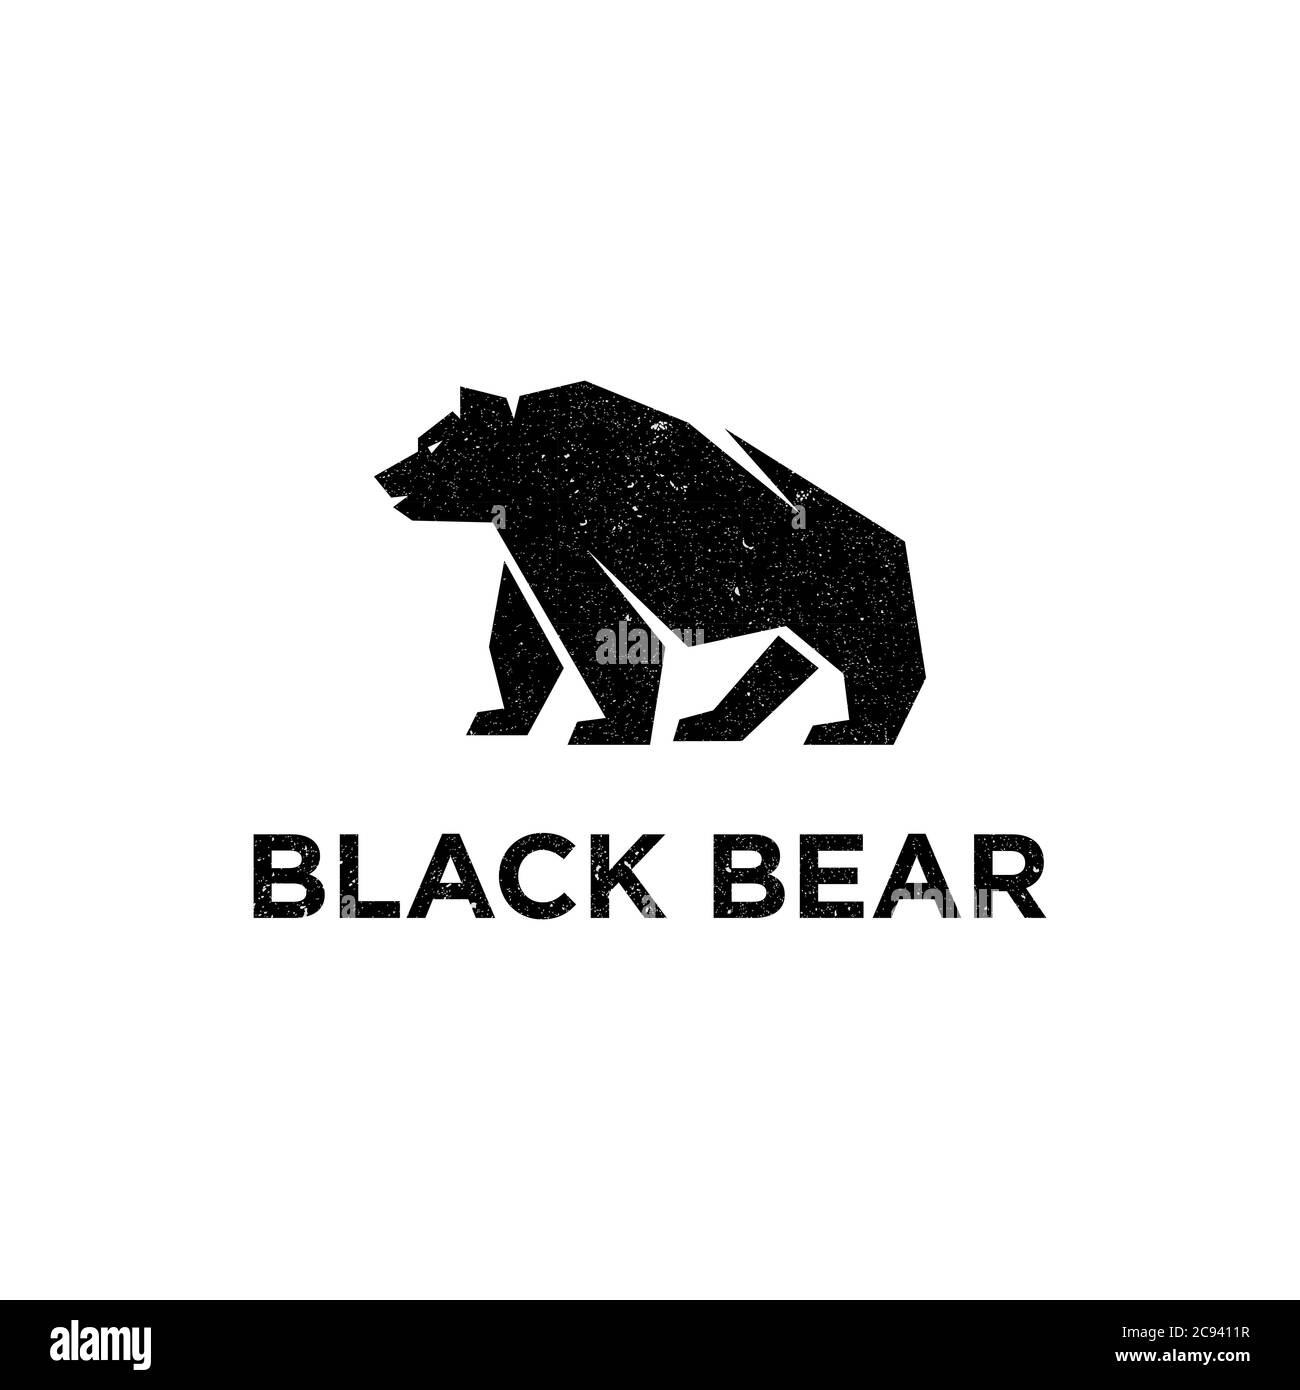 vektor-Illustration Vintage Black Bear Logo Inspiration, gut für Fitness und Outdoor-Logo Marke Vorlage Stock Vektor